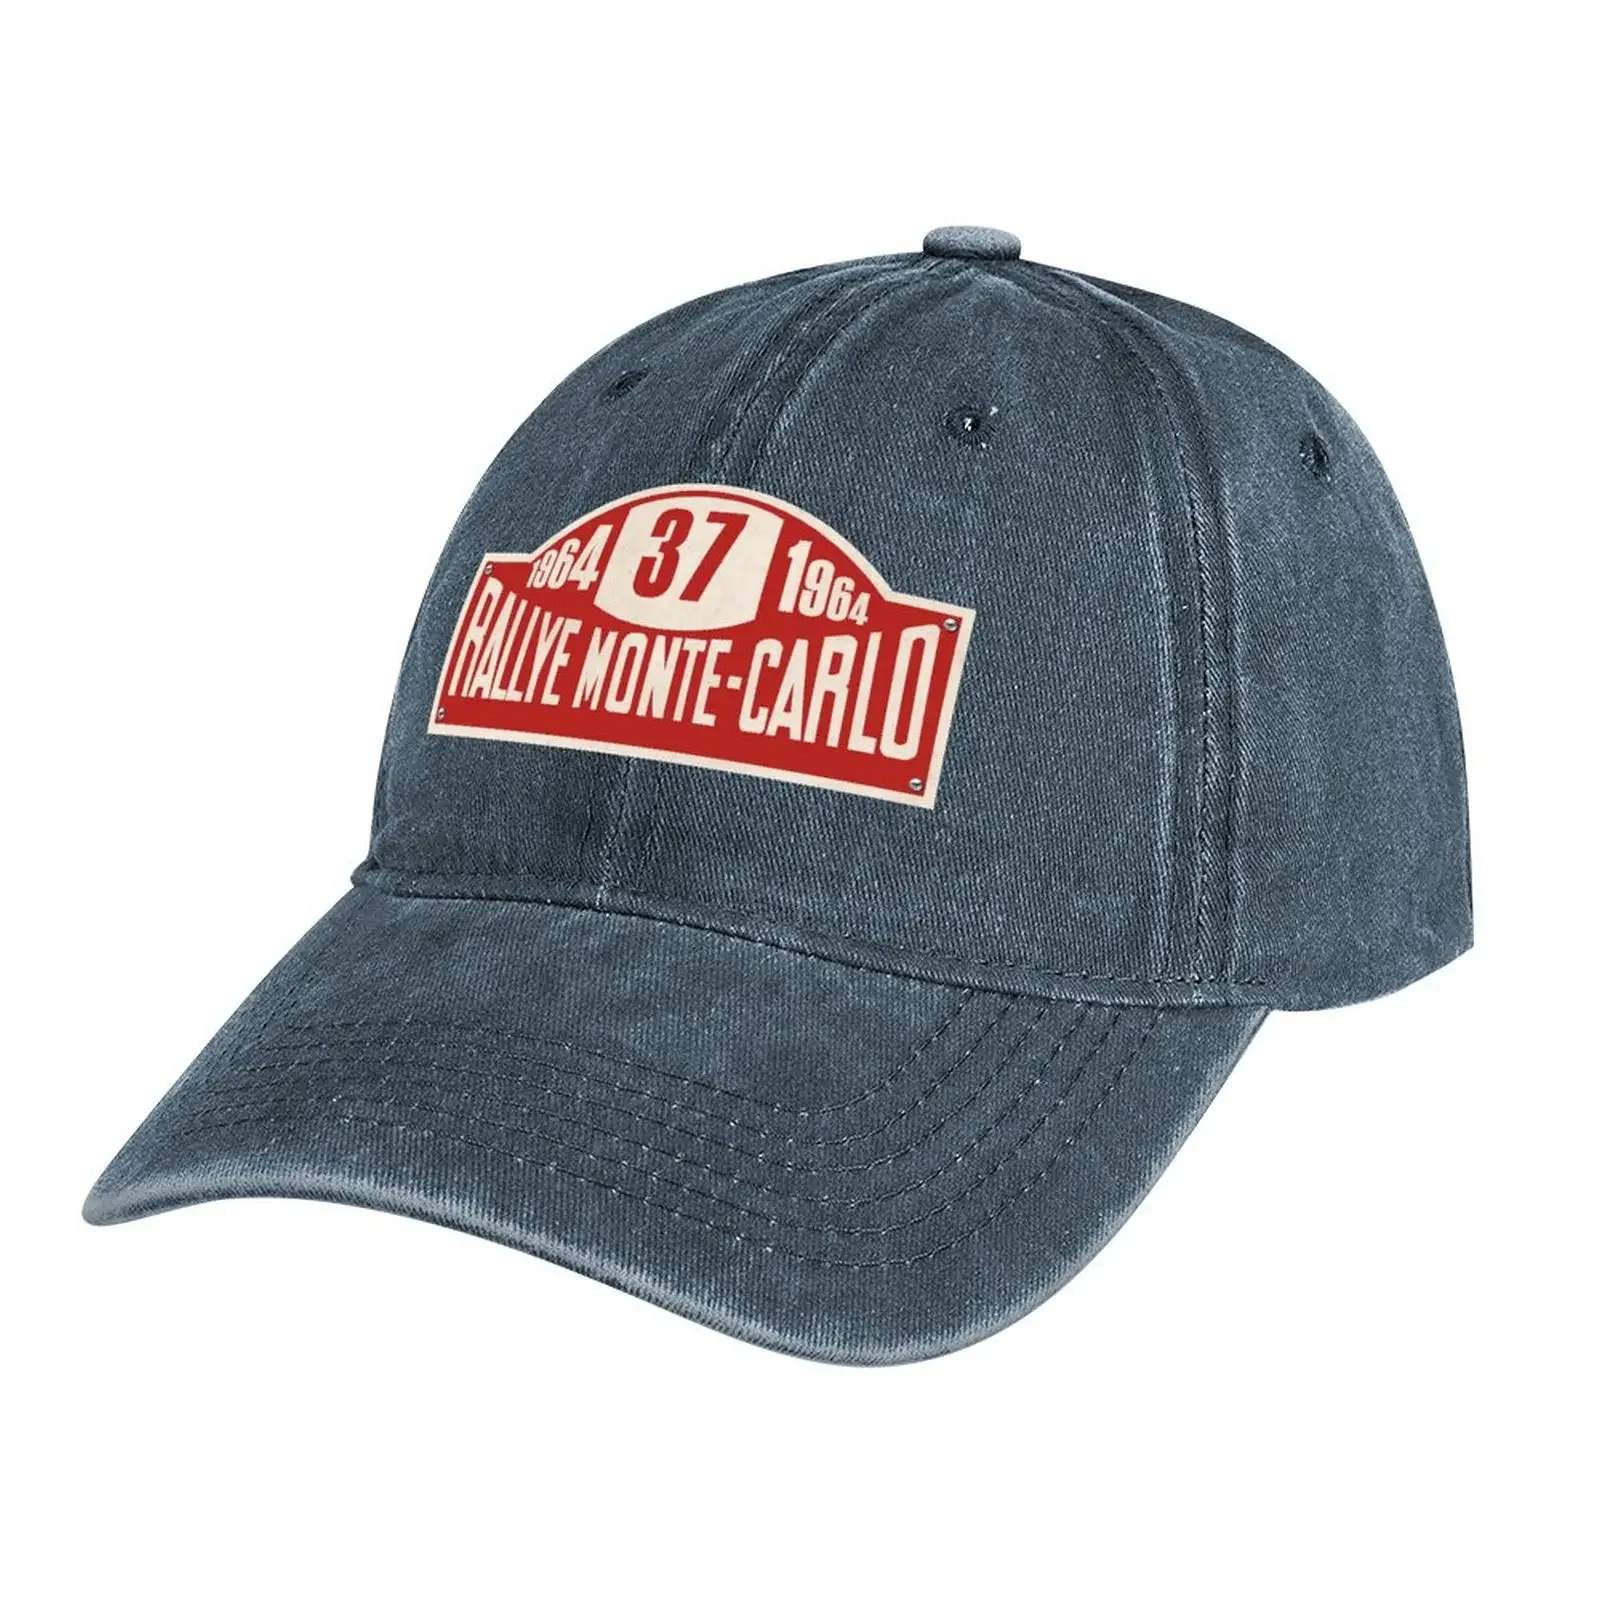 

Rallye Monte Carlo 1964 Sign Cowboy Hat Boonie Hats Trucker Hats Kids Hat Vintage Cap For Women Men's